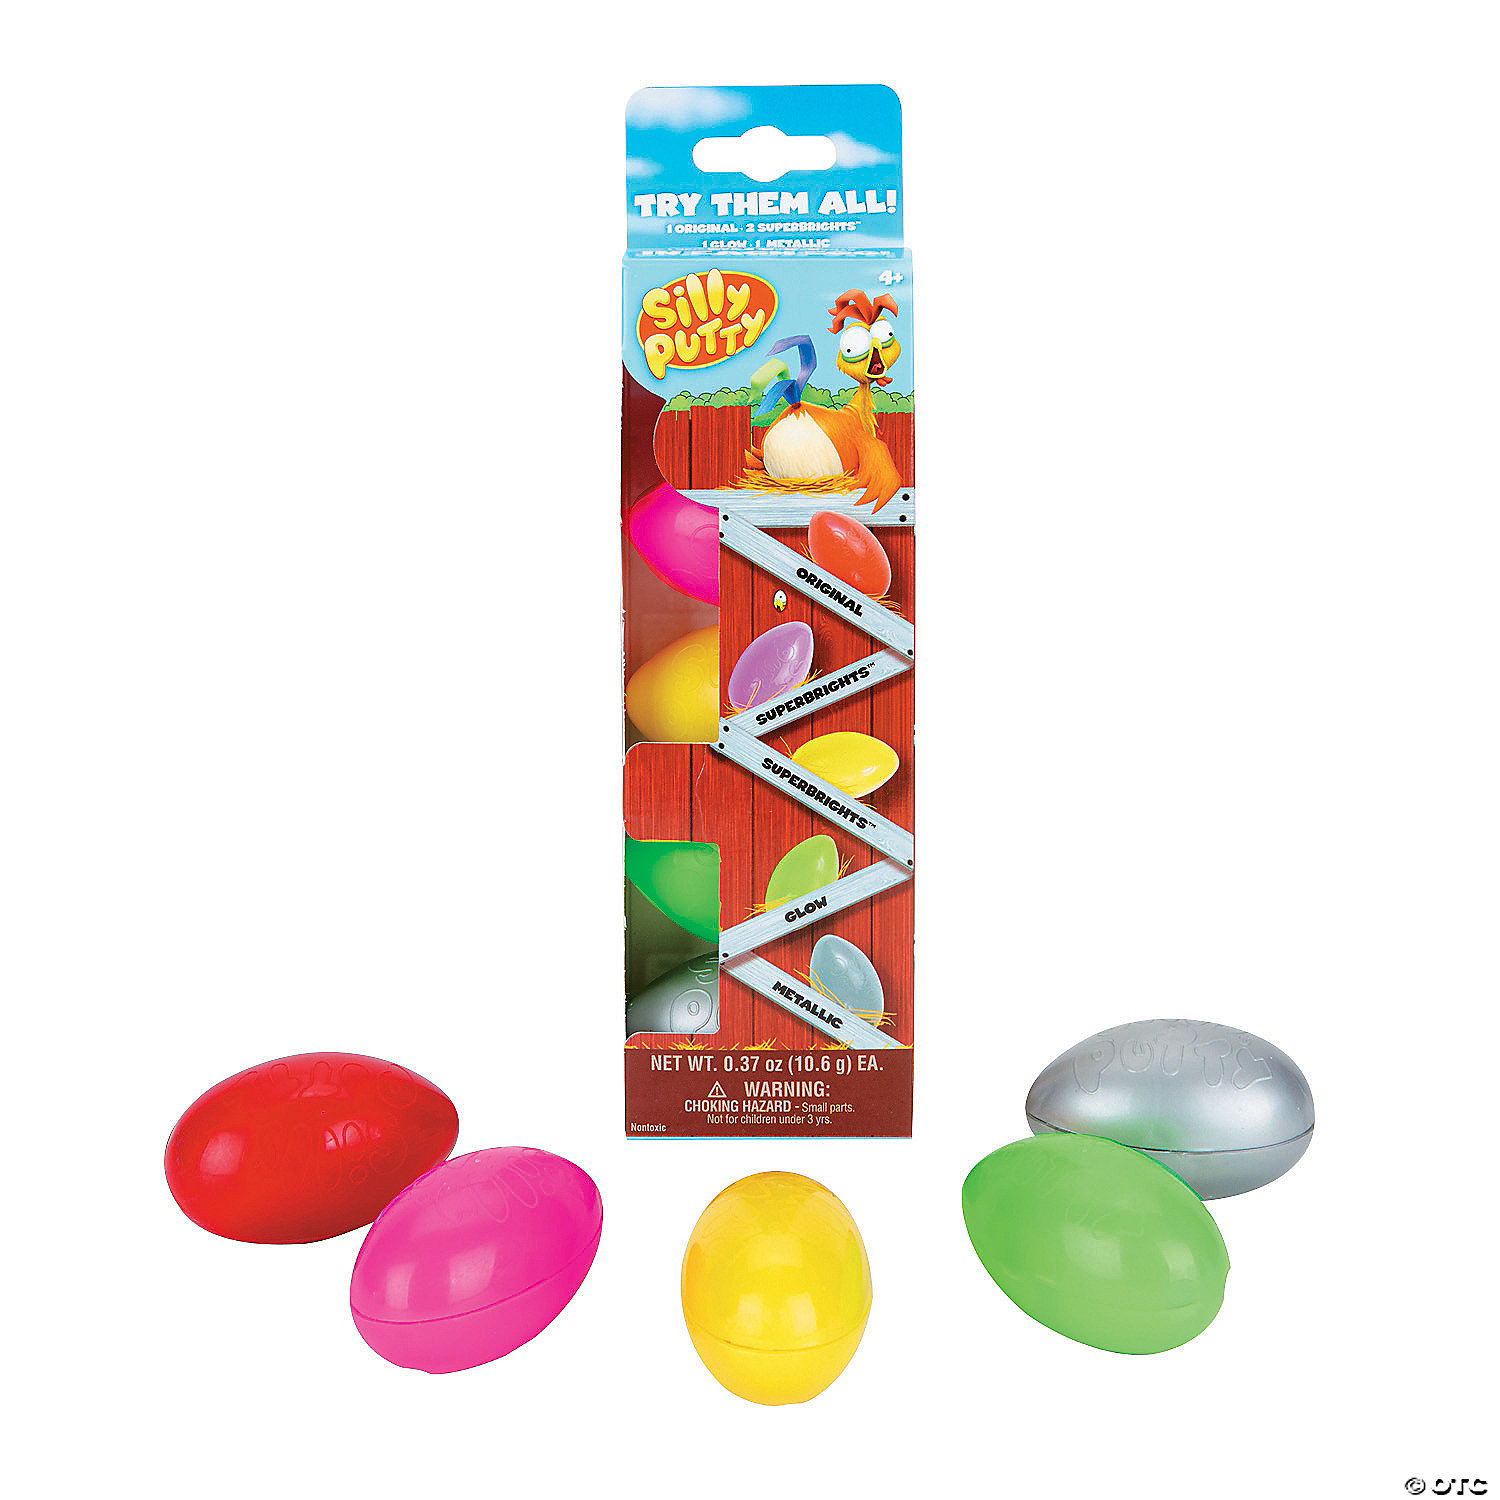 2x The Original Silly Putty Red Egg Crayola Hallmark Toy Gift for sale online 